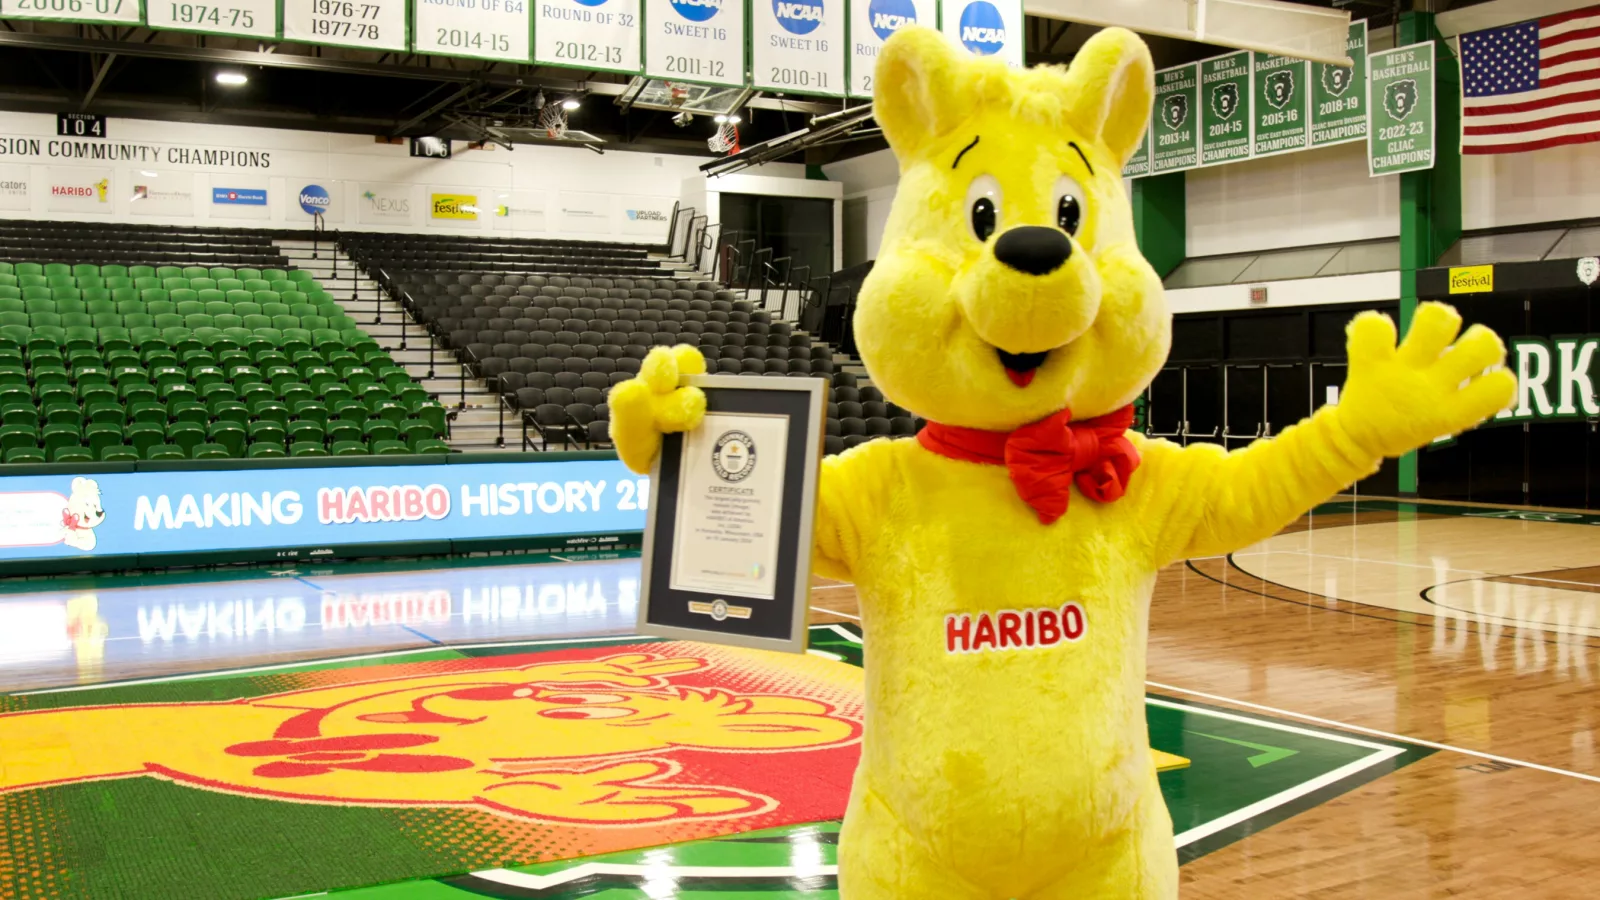 HARIBO mascot holding the GUINNESS WORLD RECORDS